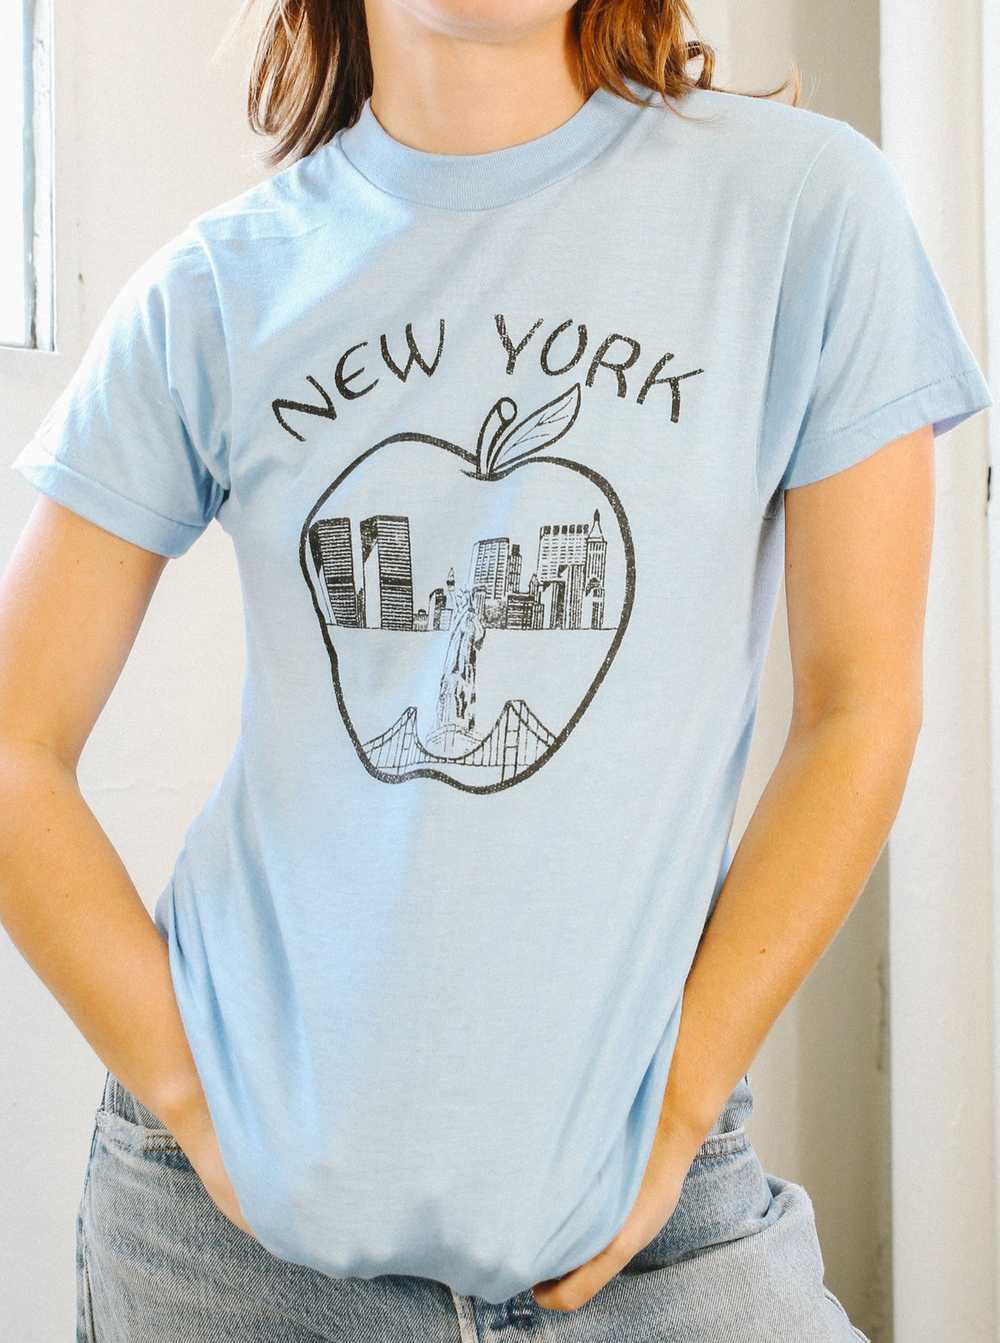 New York "Big Apple" T-Shirt - image 1